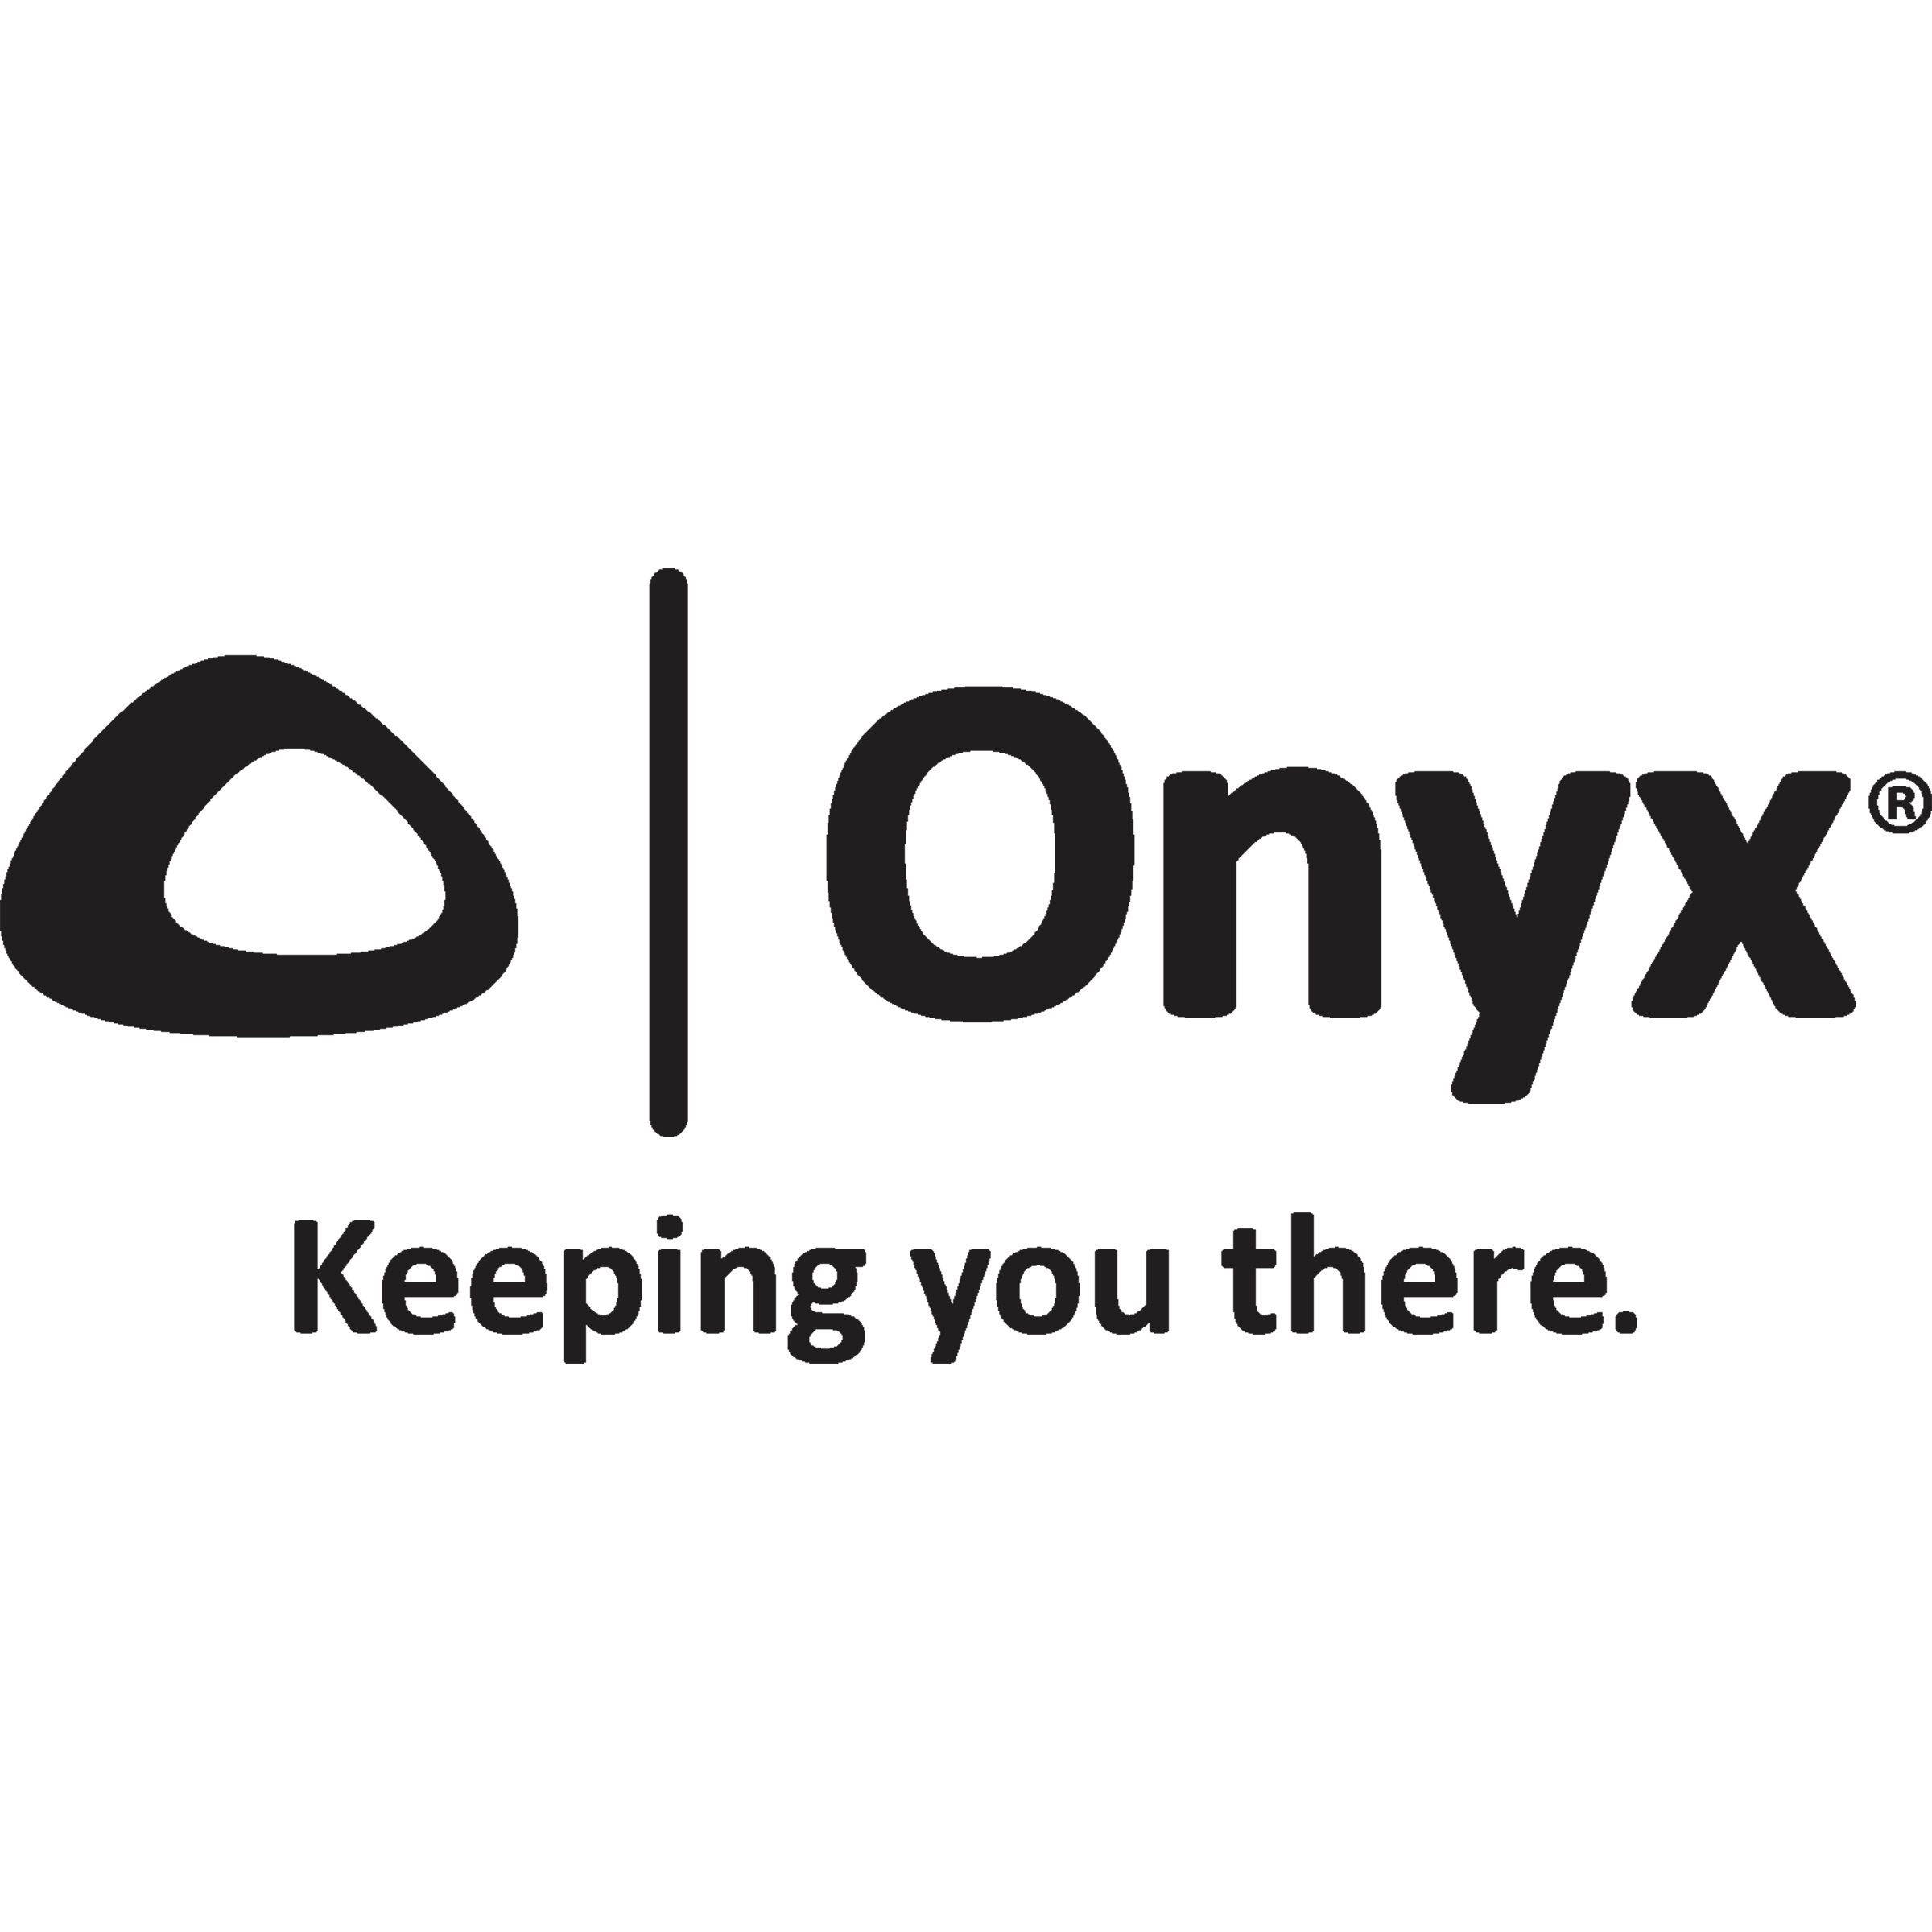 810-Onyx